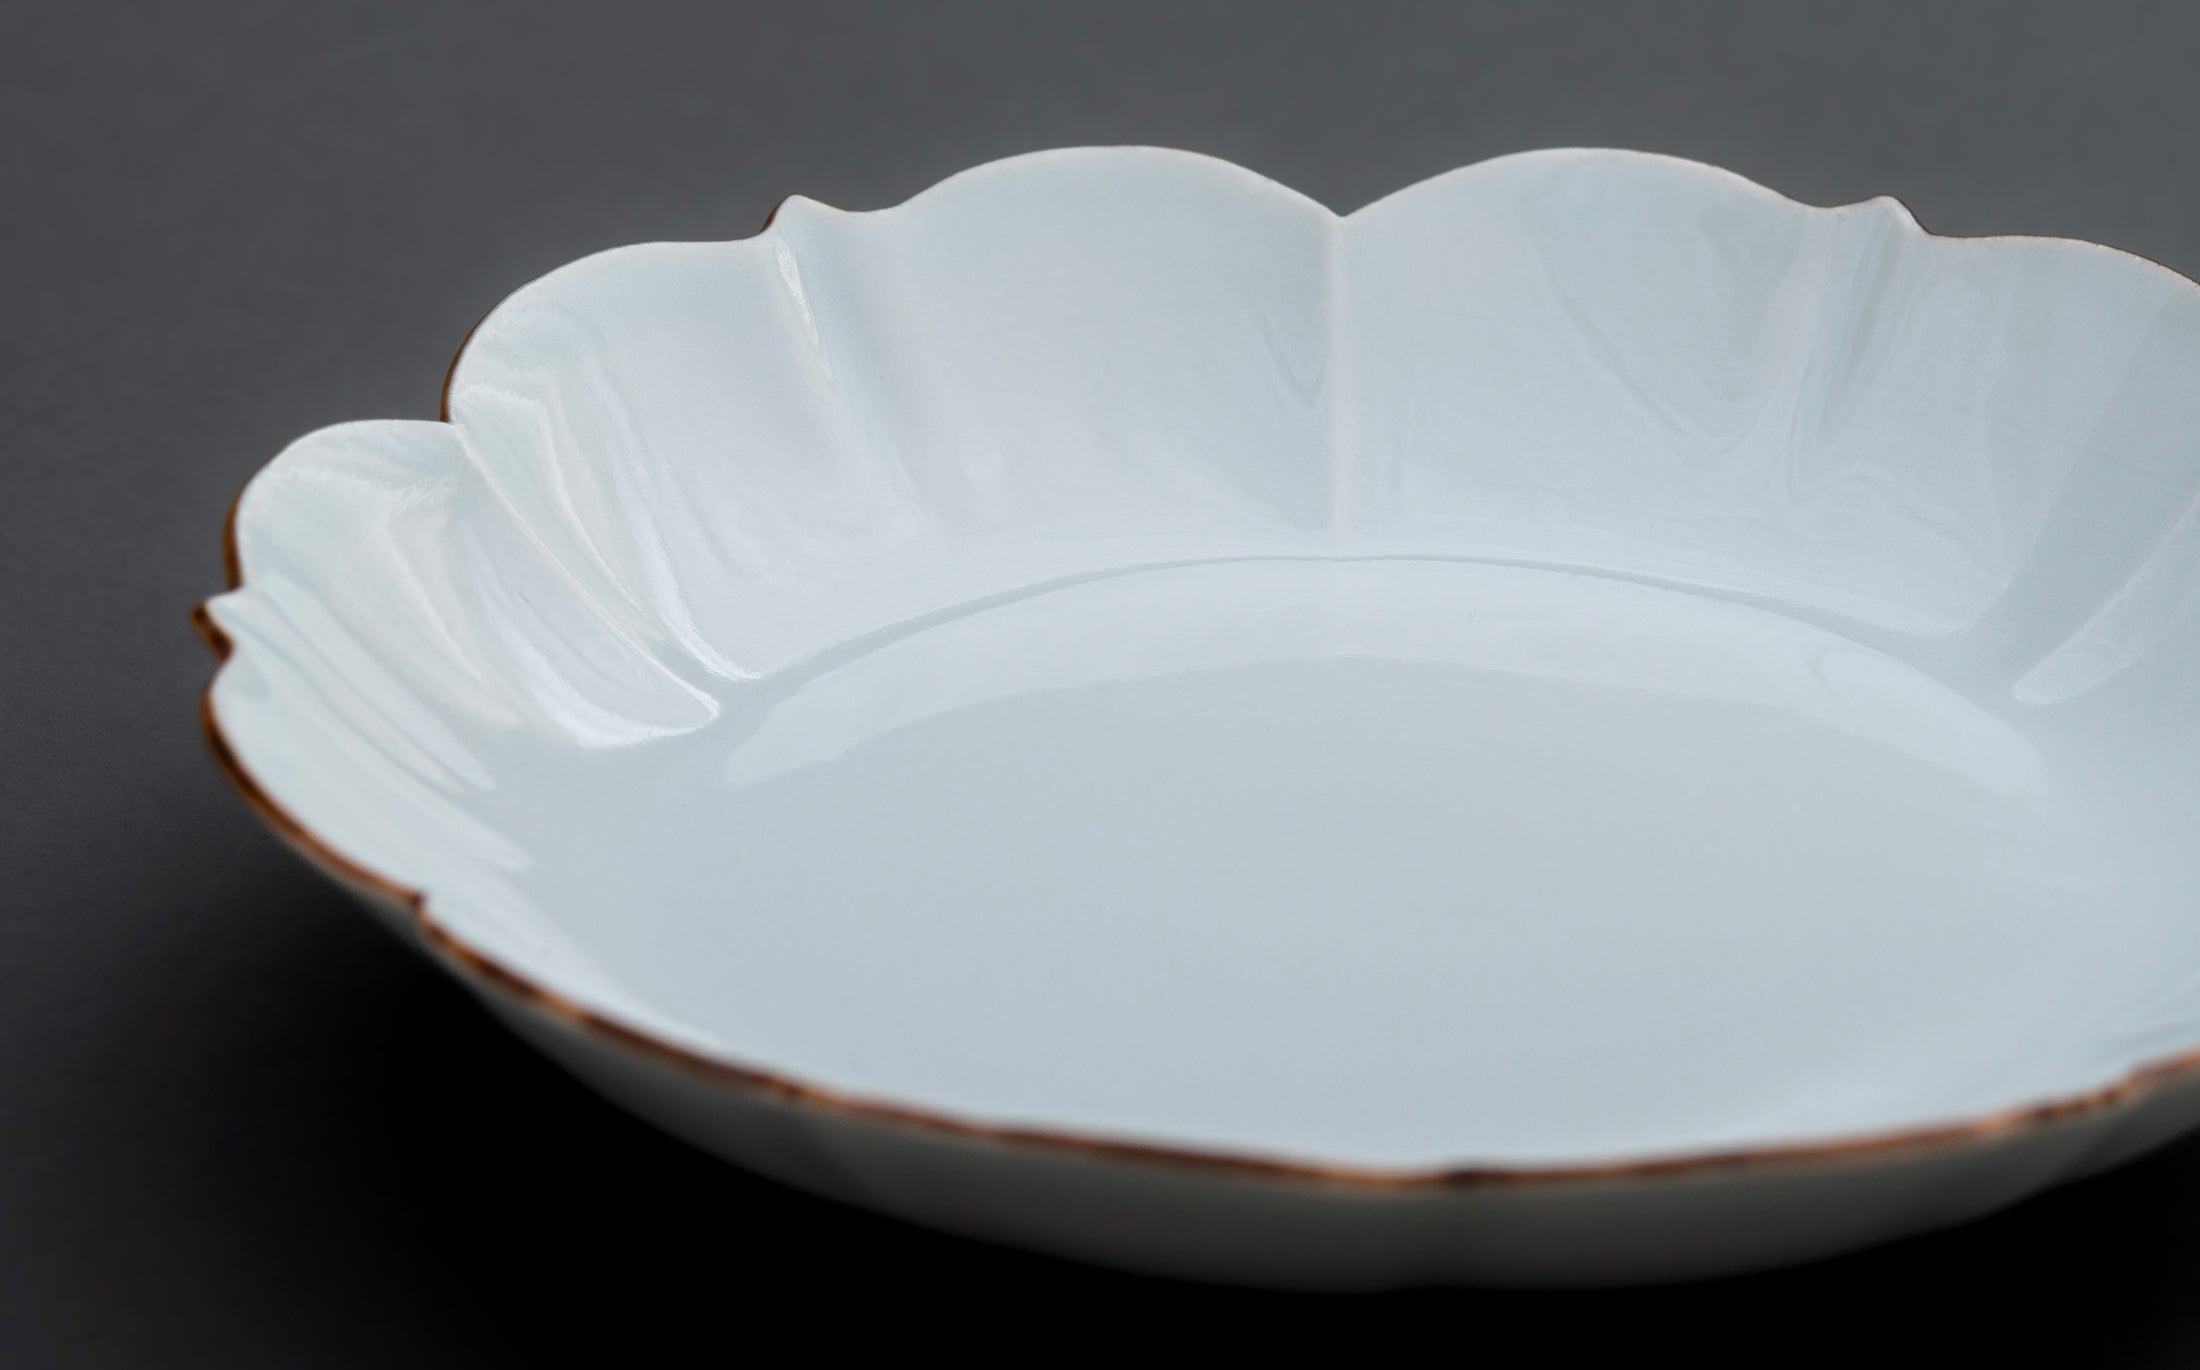 Katsutoshi Mizuno - Porcelain White - Plate 004